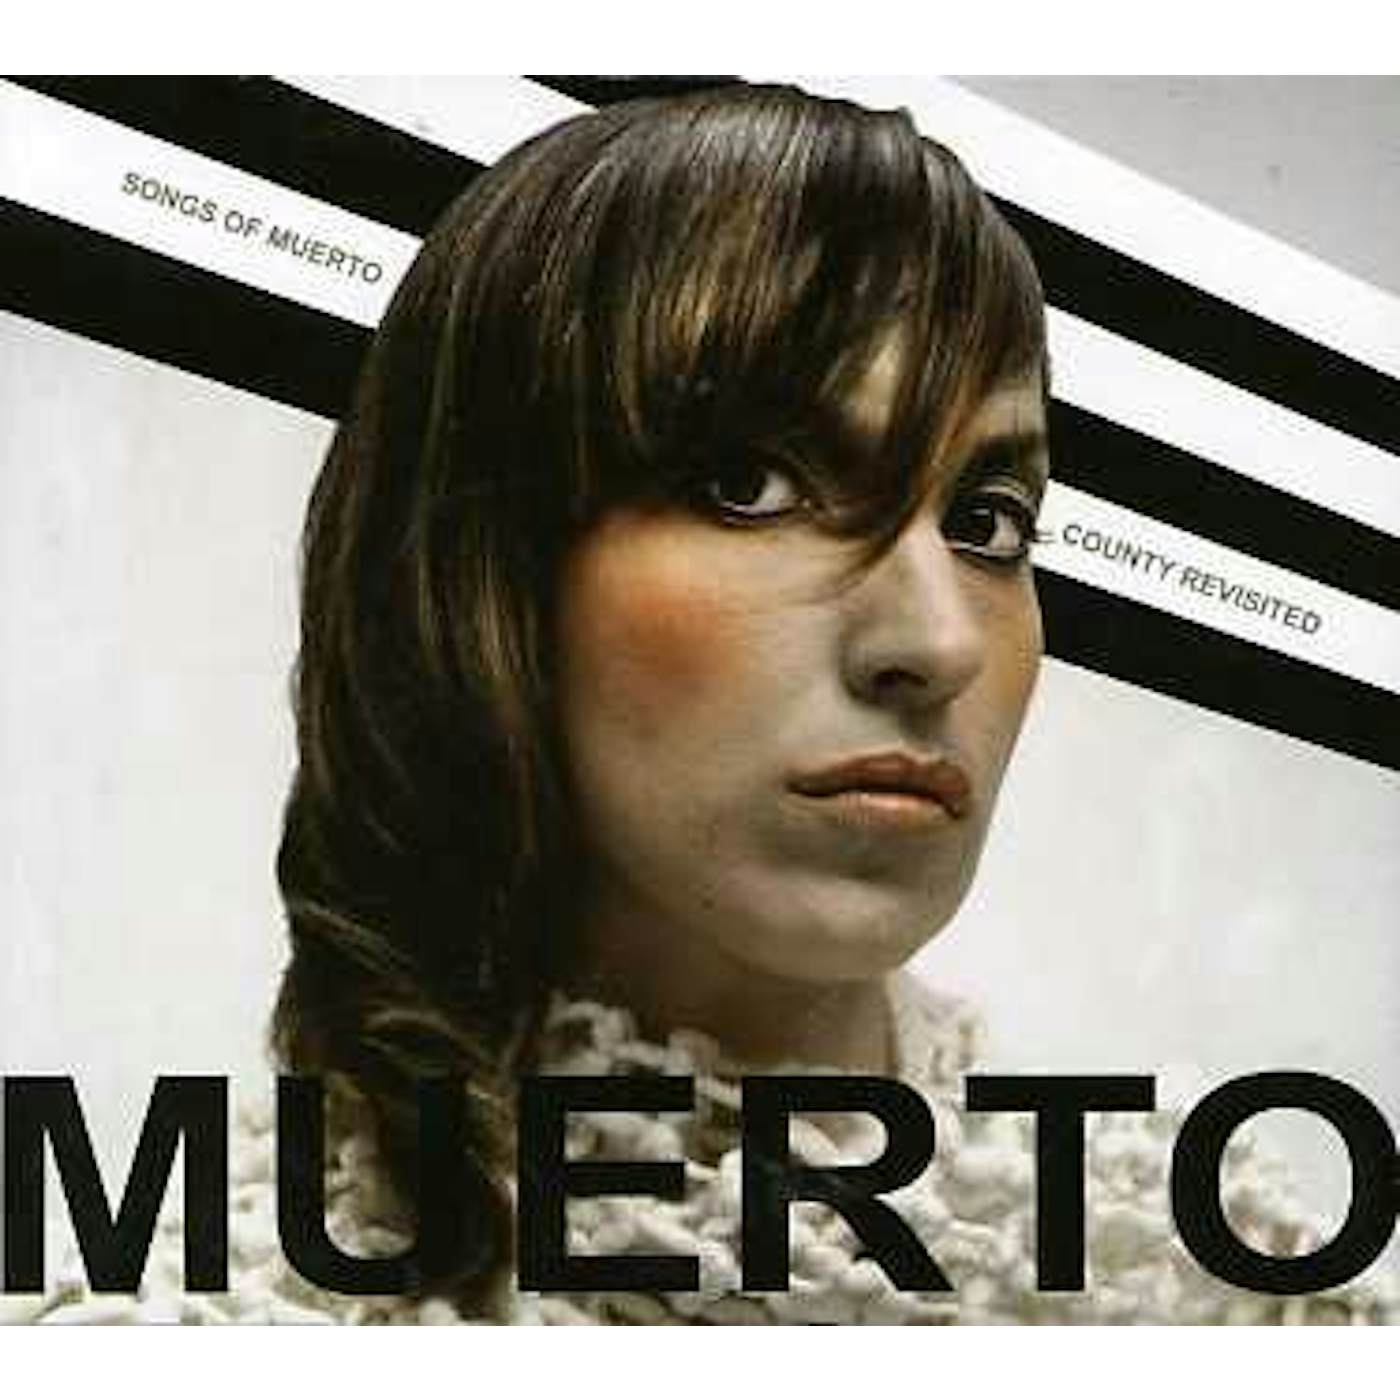 Puerto Muerto SONGS OF MUERTO COUNTY: REVISITED CD